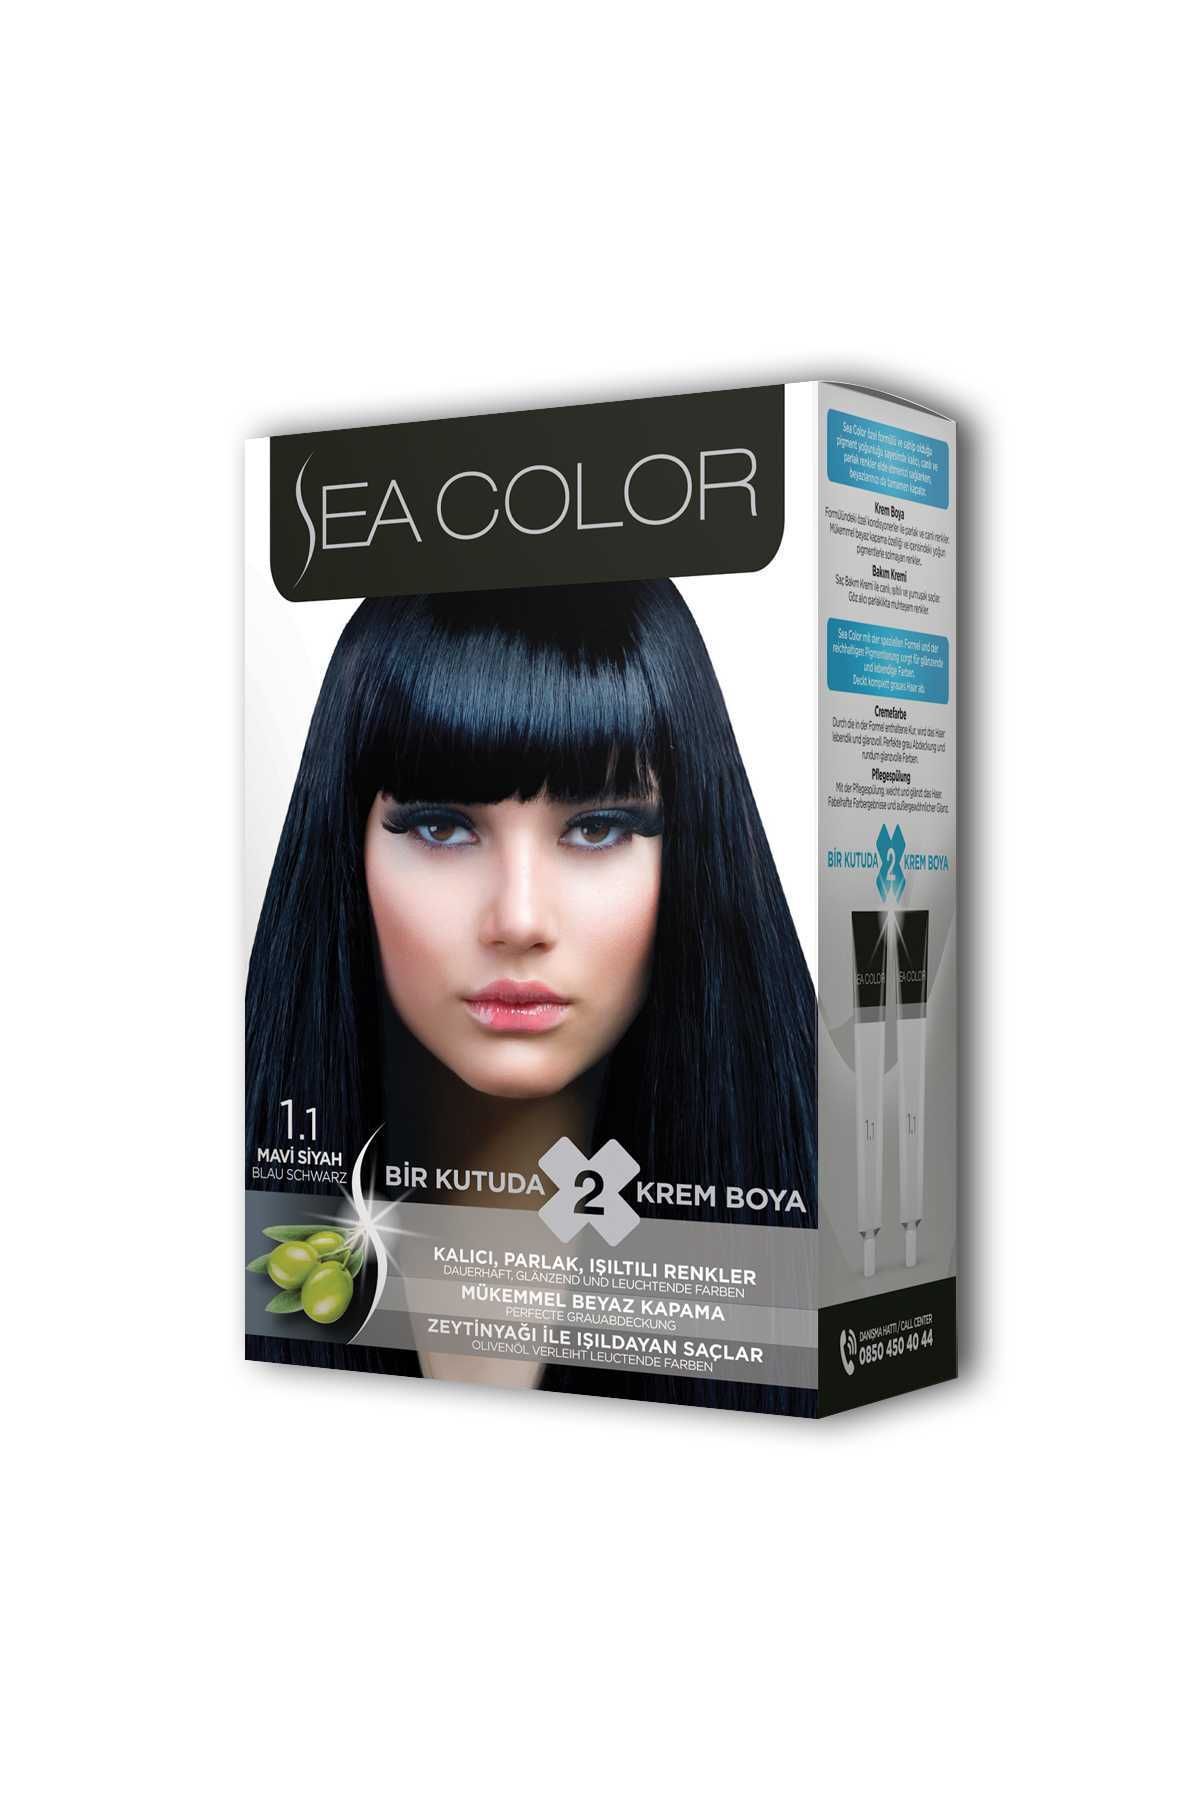 Sea Color 2 Tüp Krem Saç Boyası Seti Mavi Siyah No:1.1